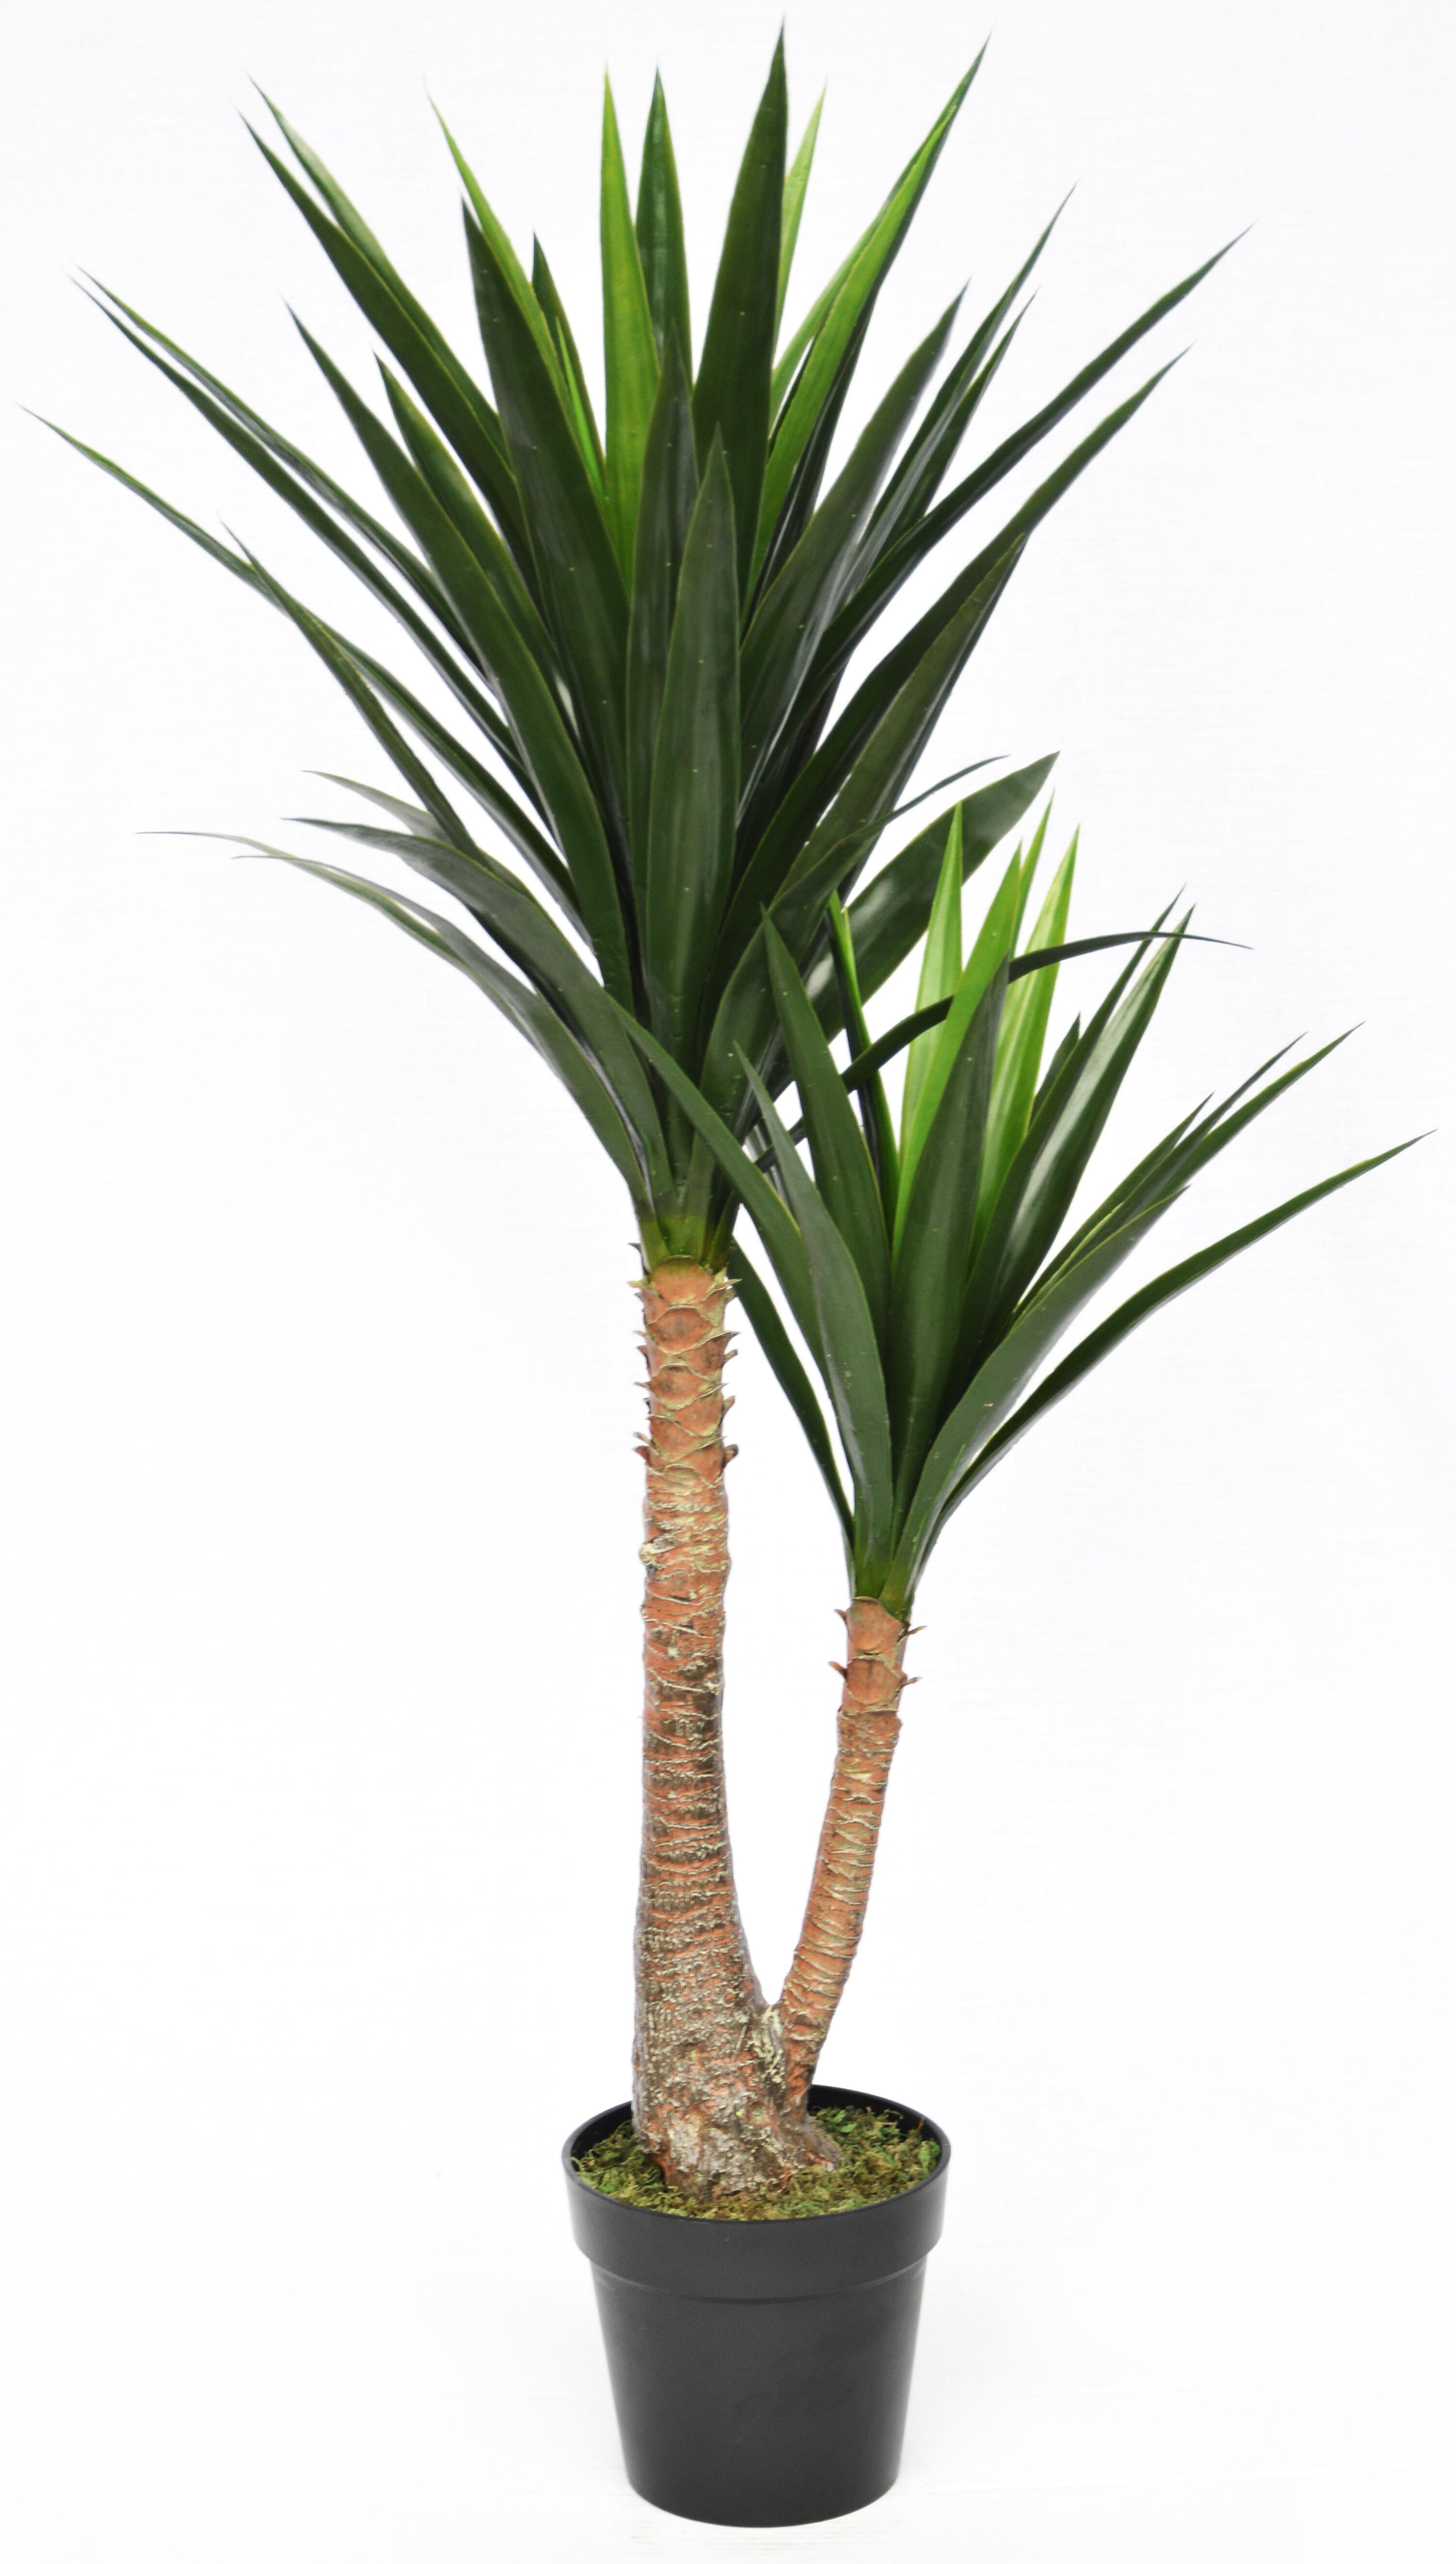 Planta artificial yuca de 120 cm de altura en maceta de 16 cm